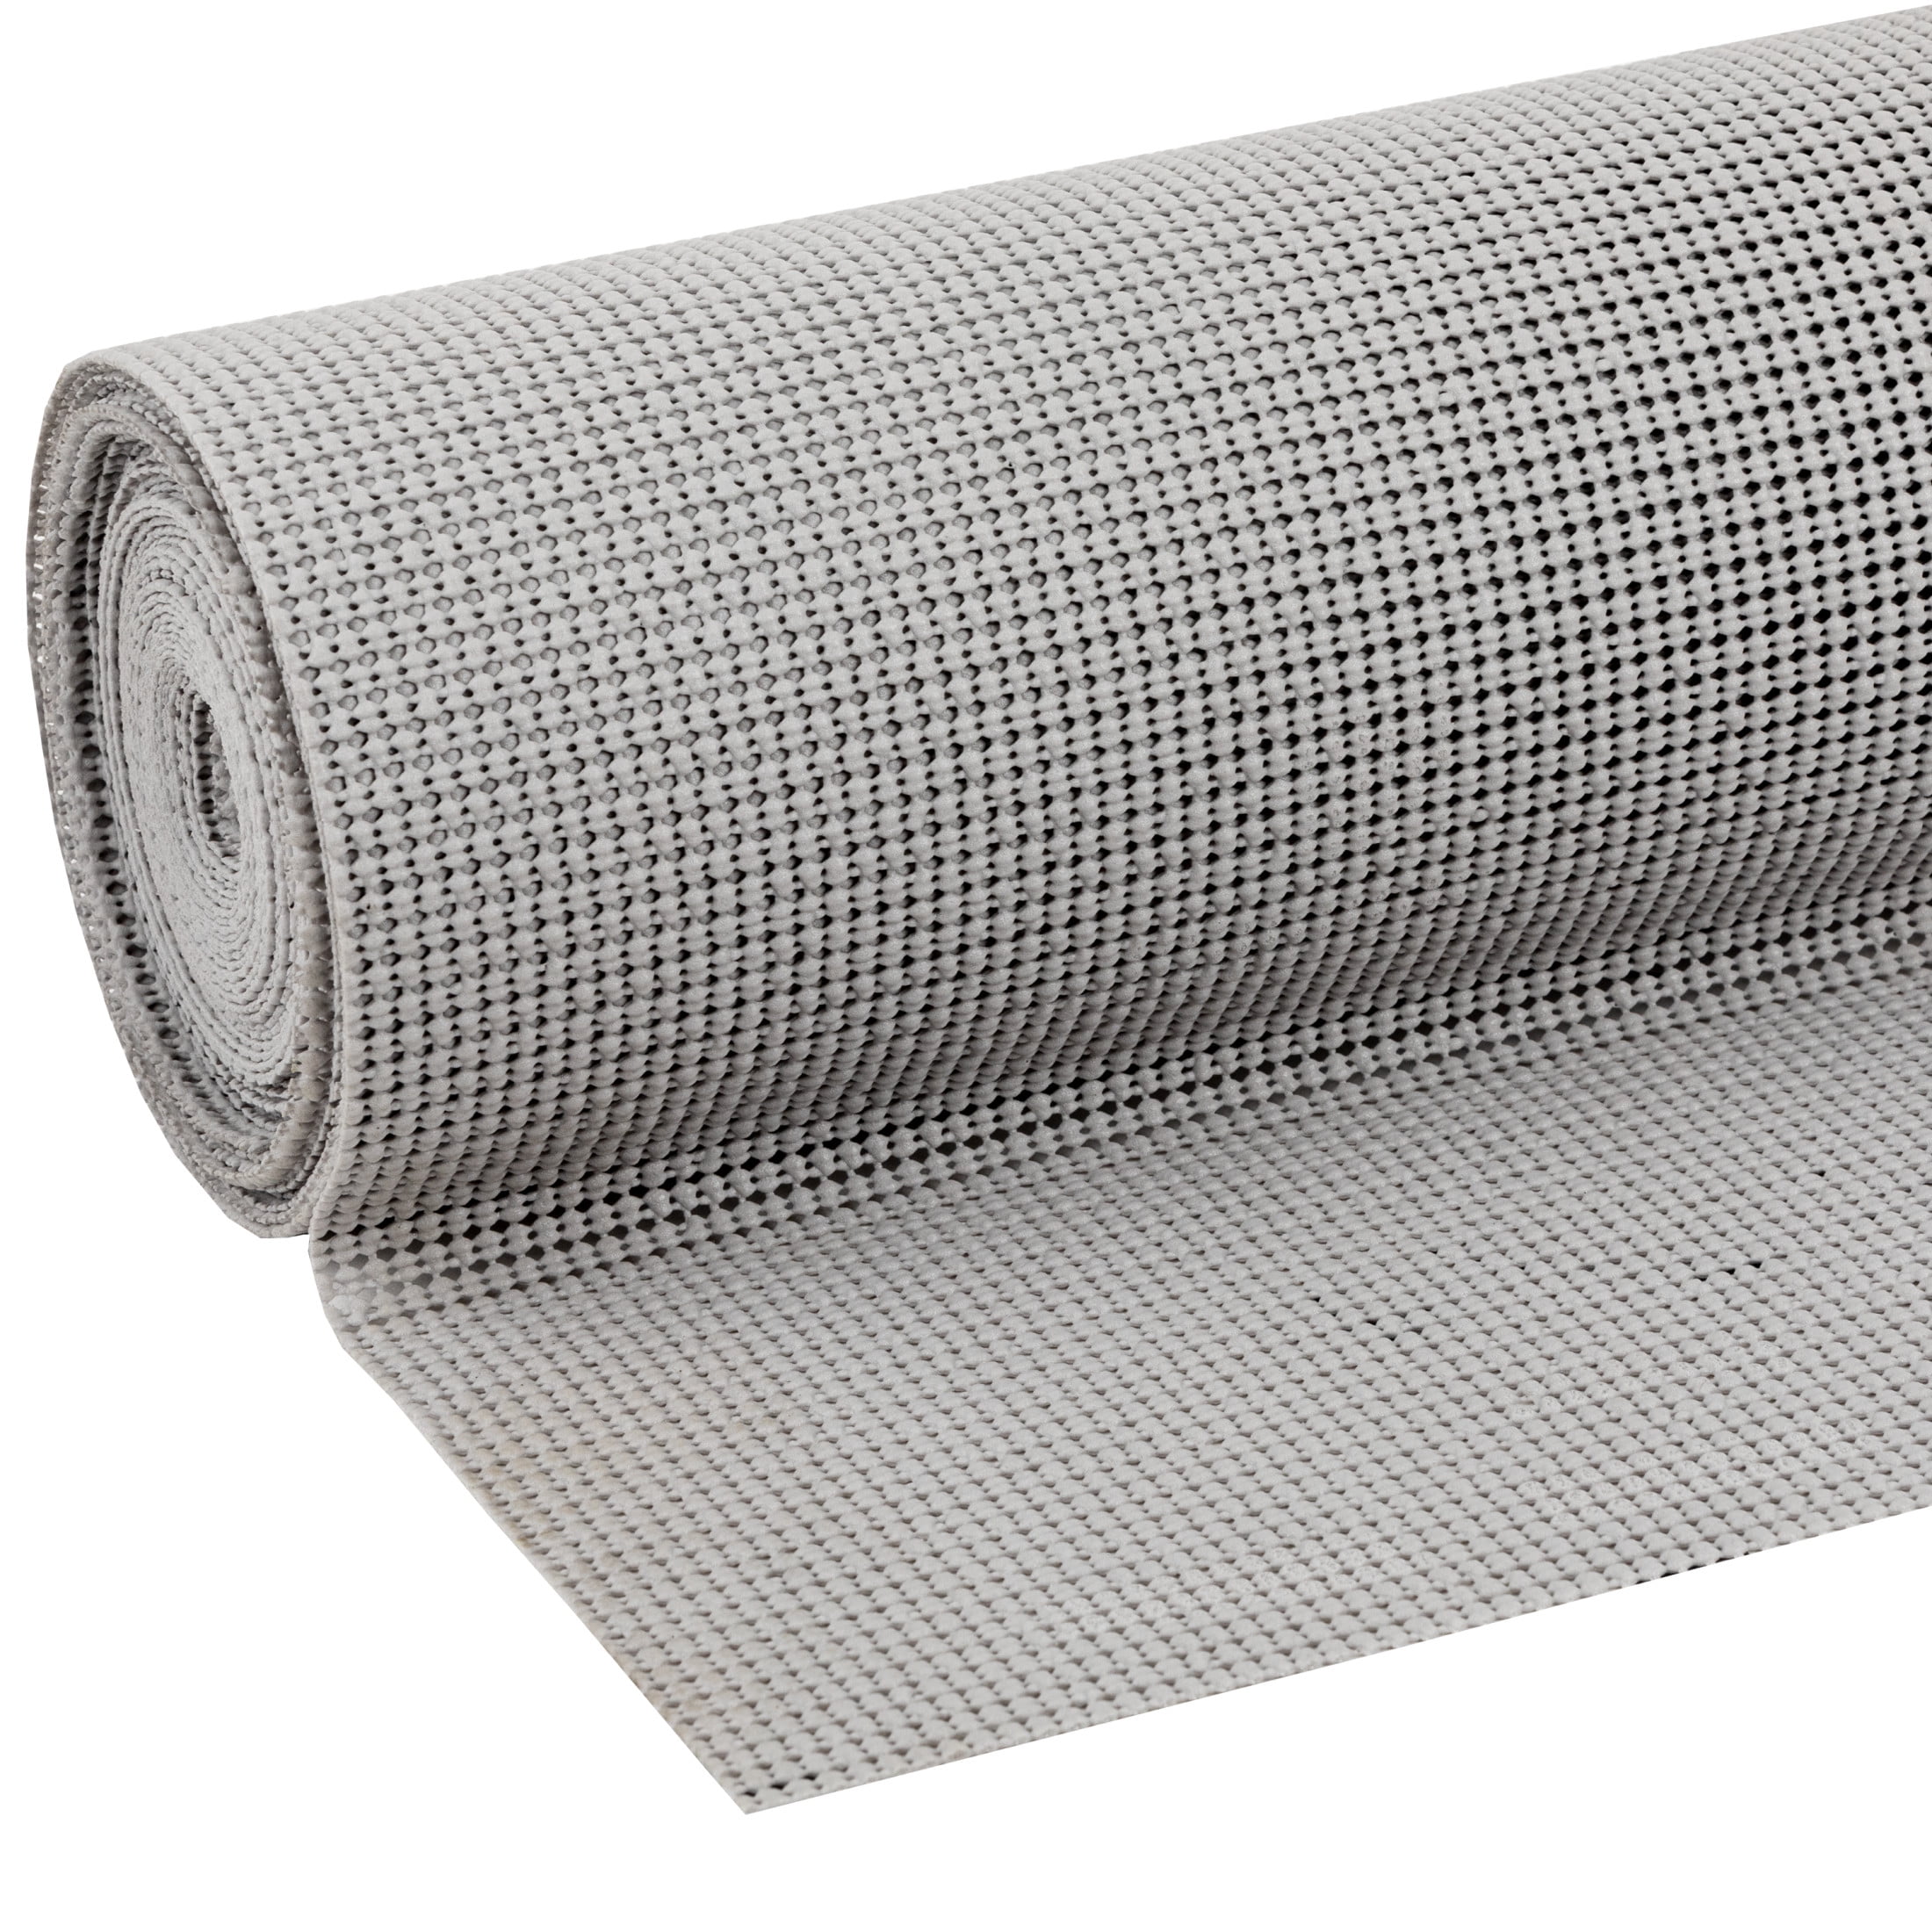 SteadMax Shelf Liner, 12 in x 40 FT Total, Non-Adhesive, Non-Slip